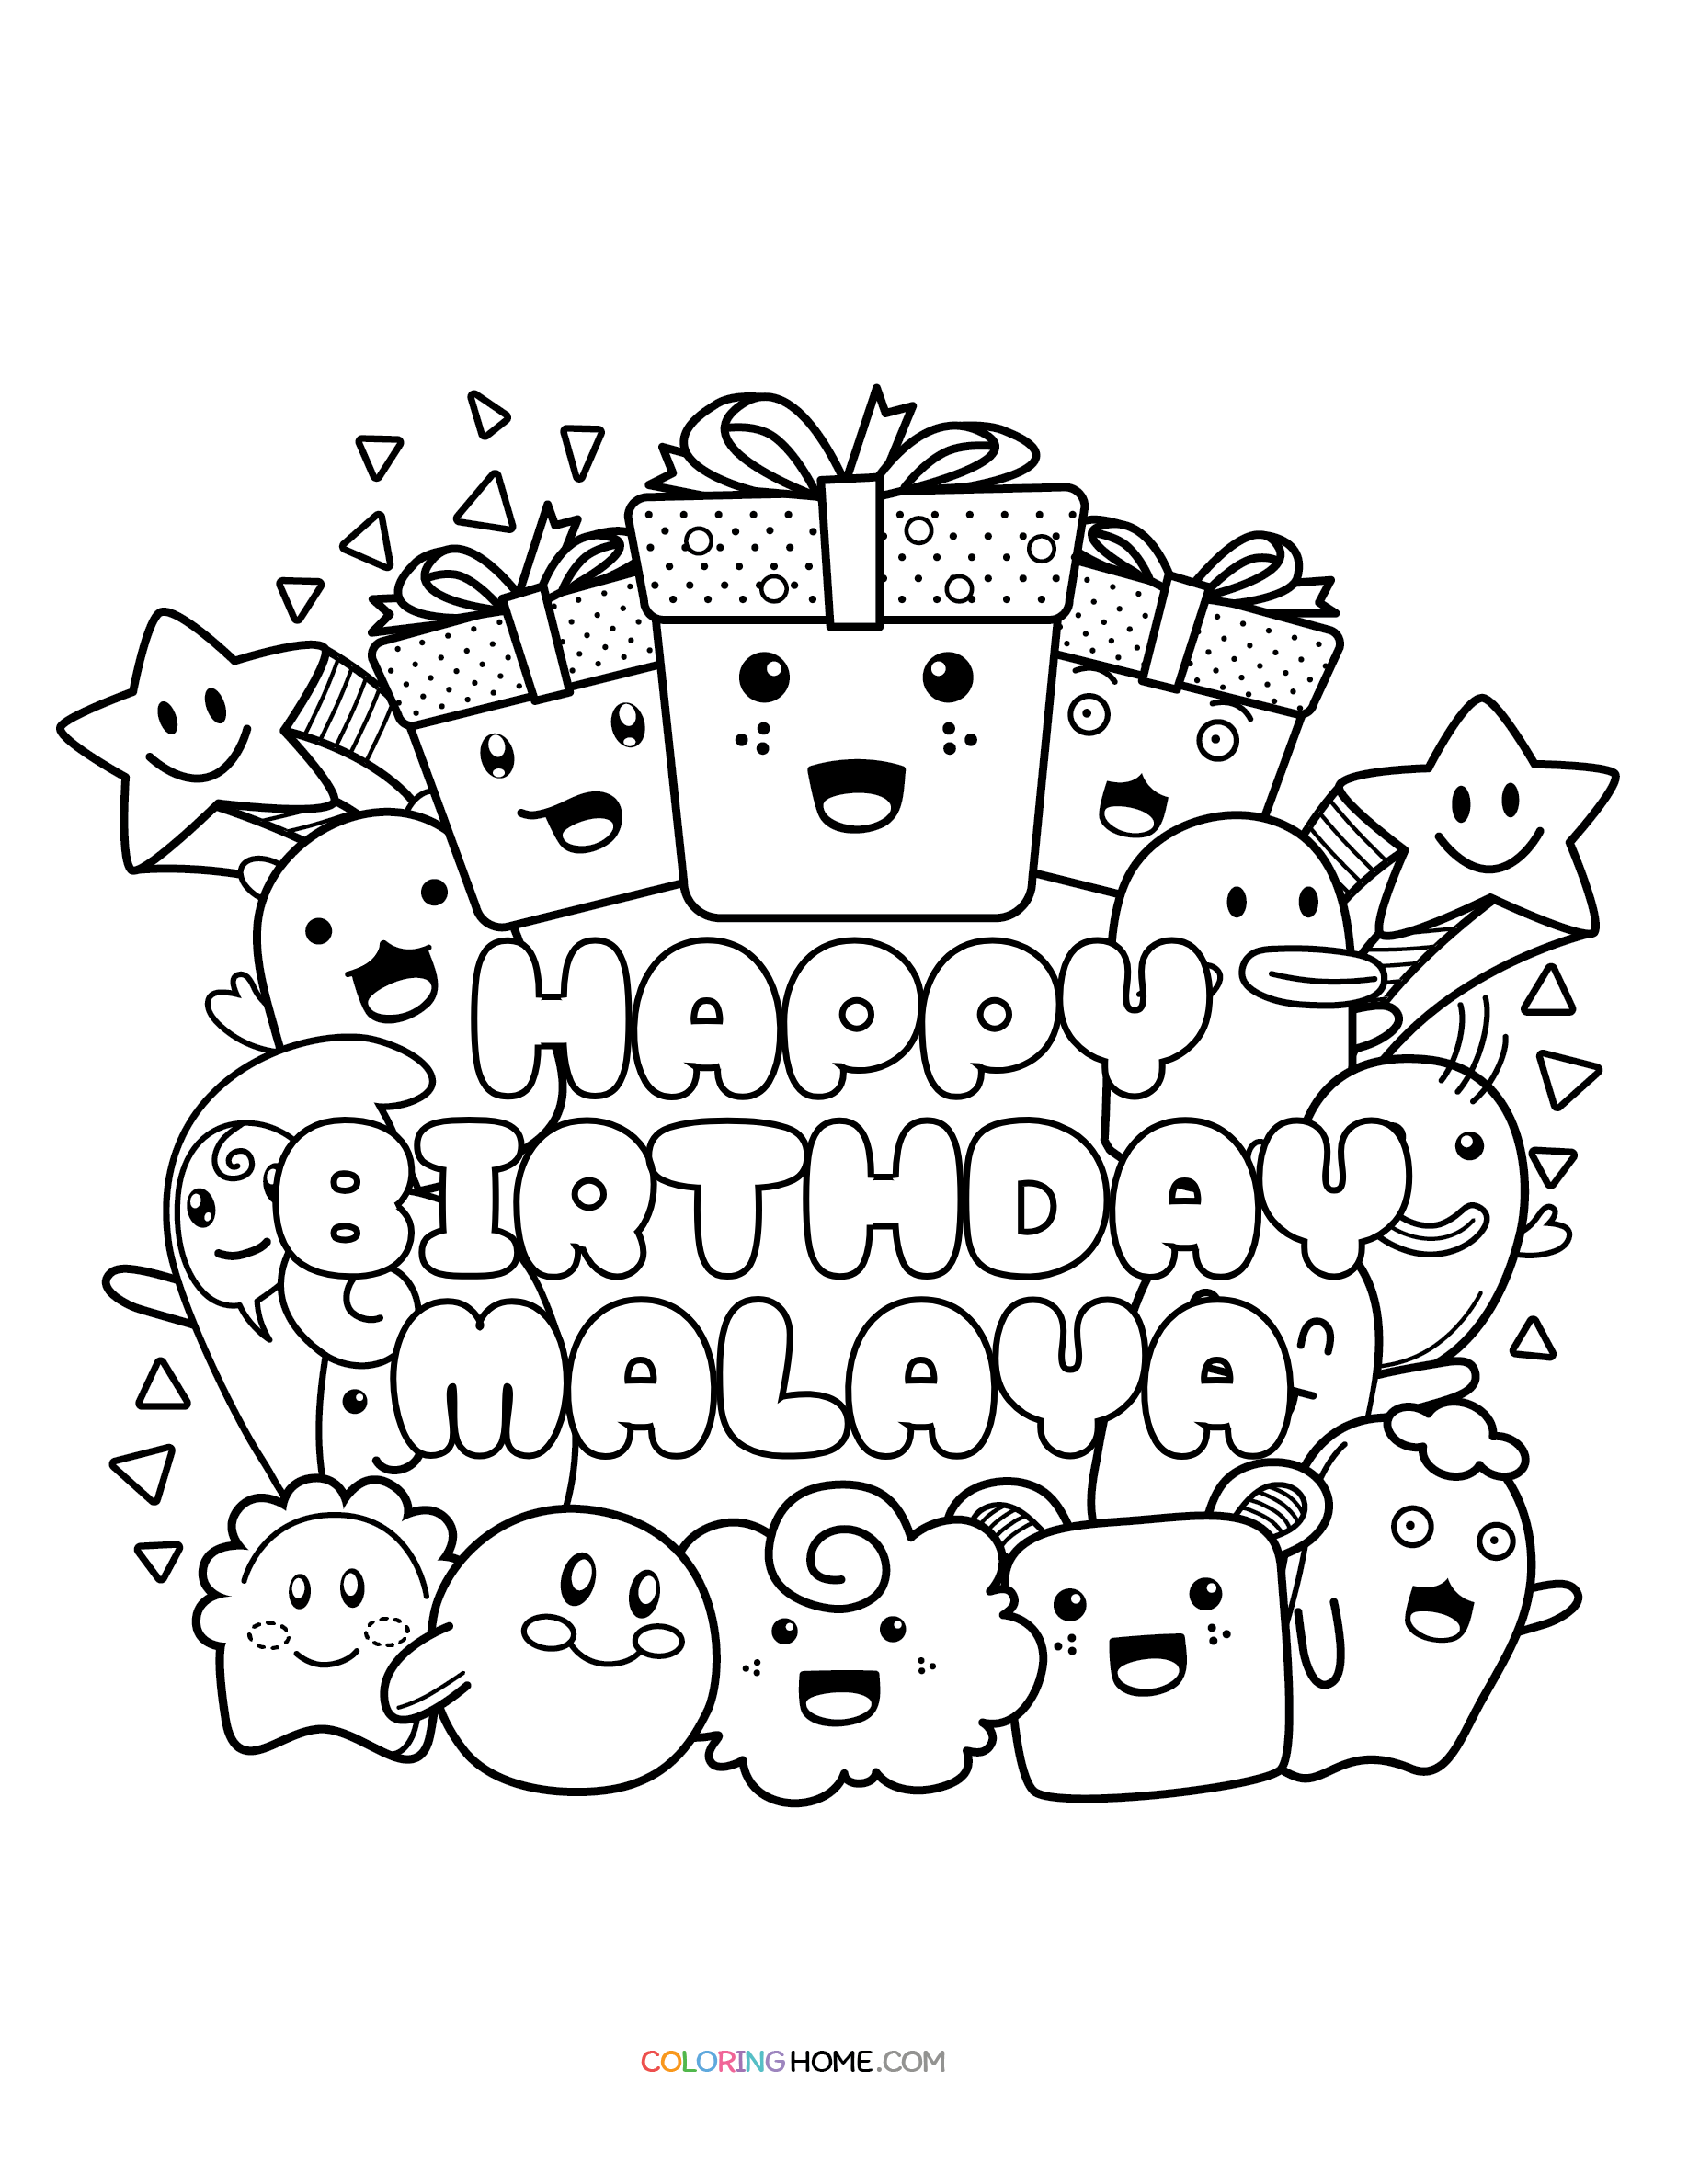 Happy Birthday Malaya coloring page